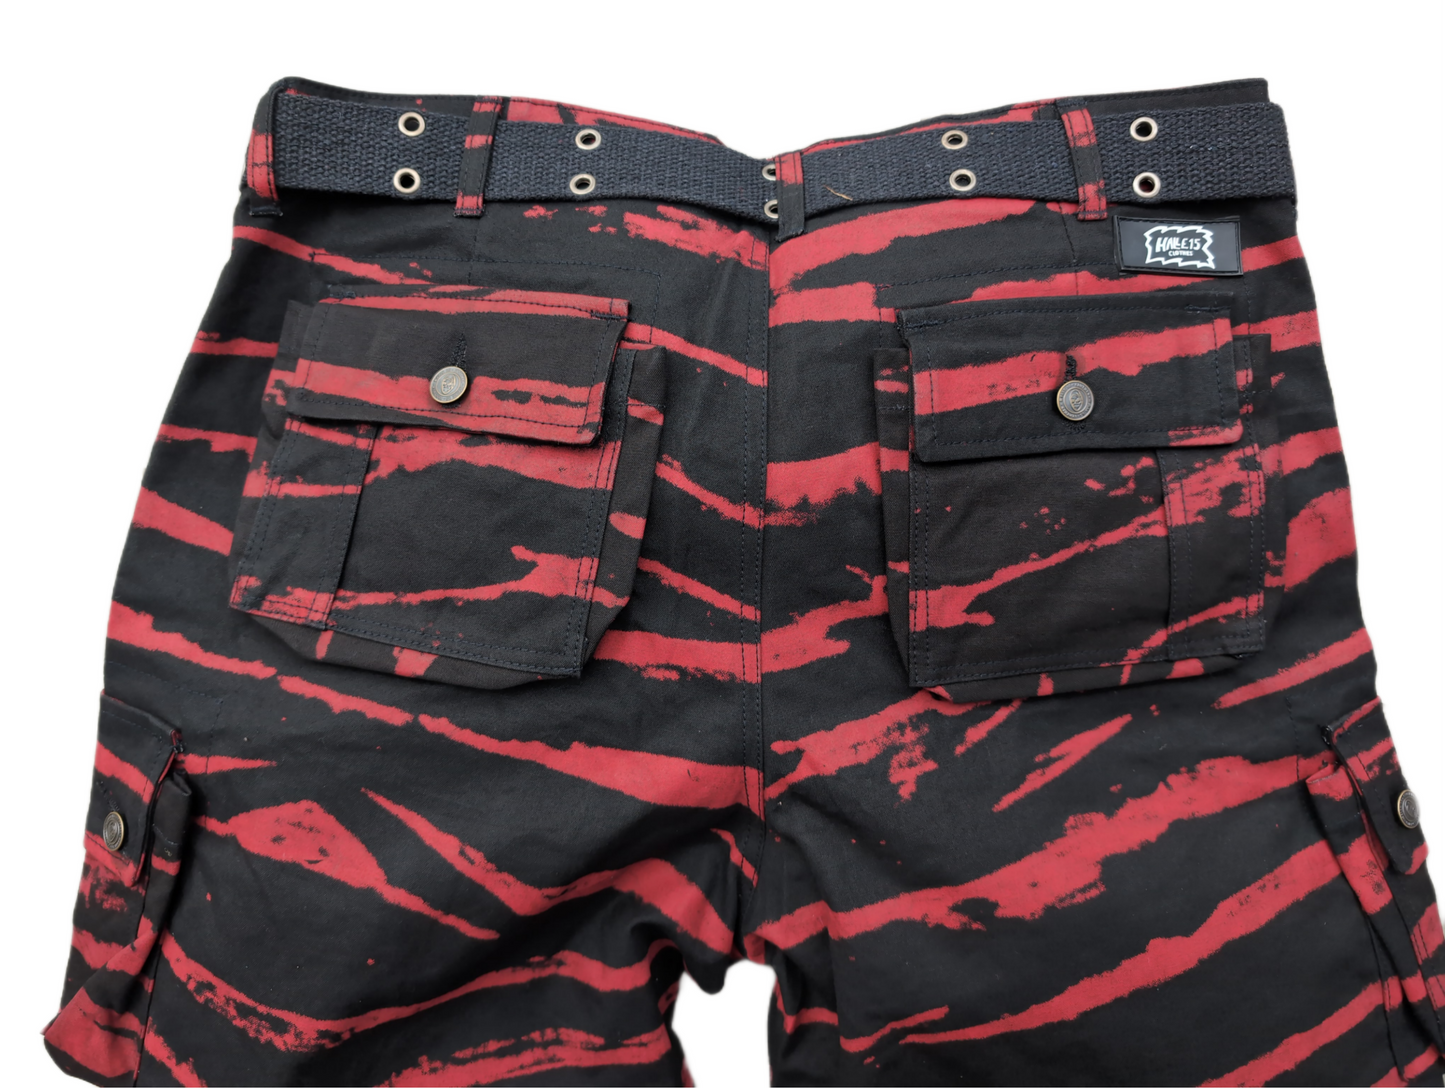 Halle 15 Ultra Cargo Shorts Black Red Stripes Vintage Shorts S Bis 5XL